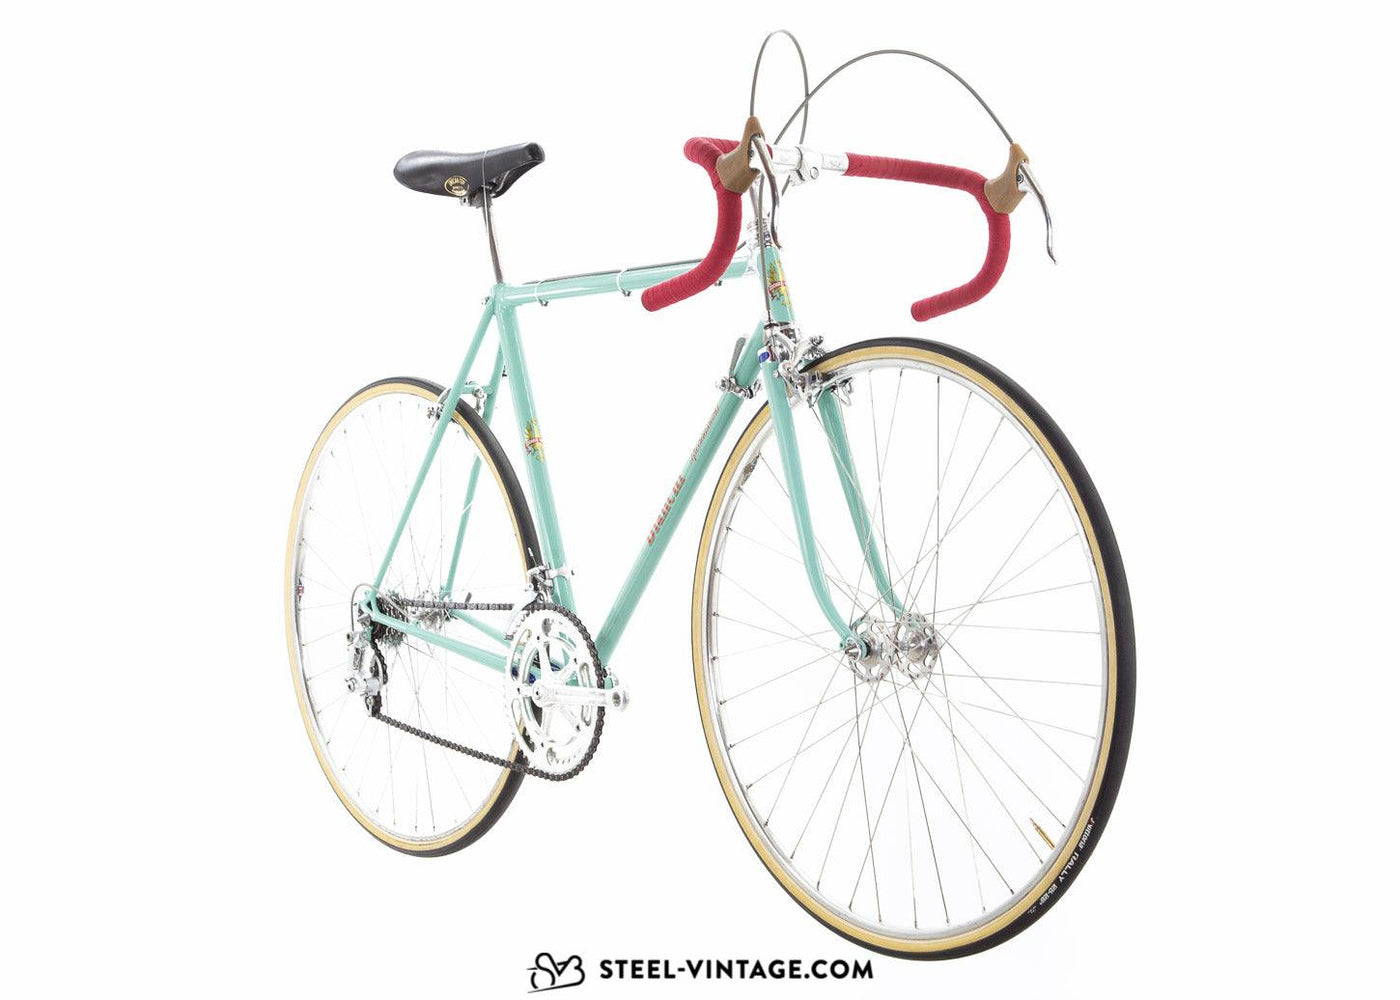 Bianchi Specialissima Vintage Road Bike 1972 | Steel Vintage Bikes